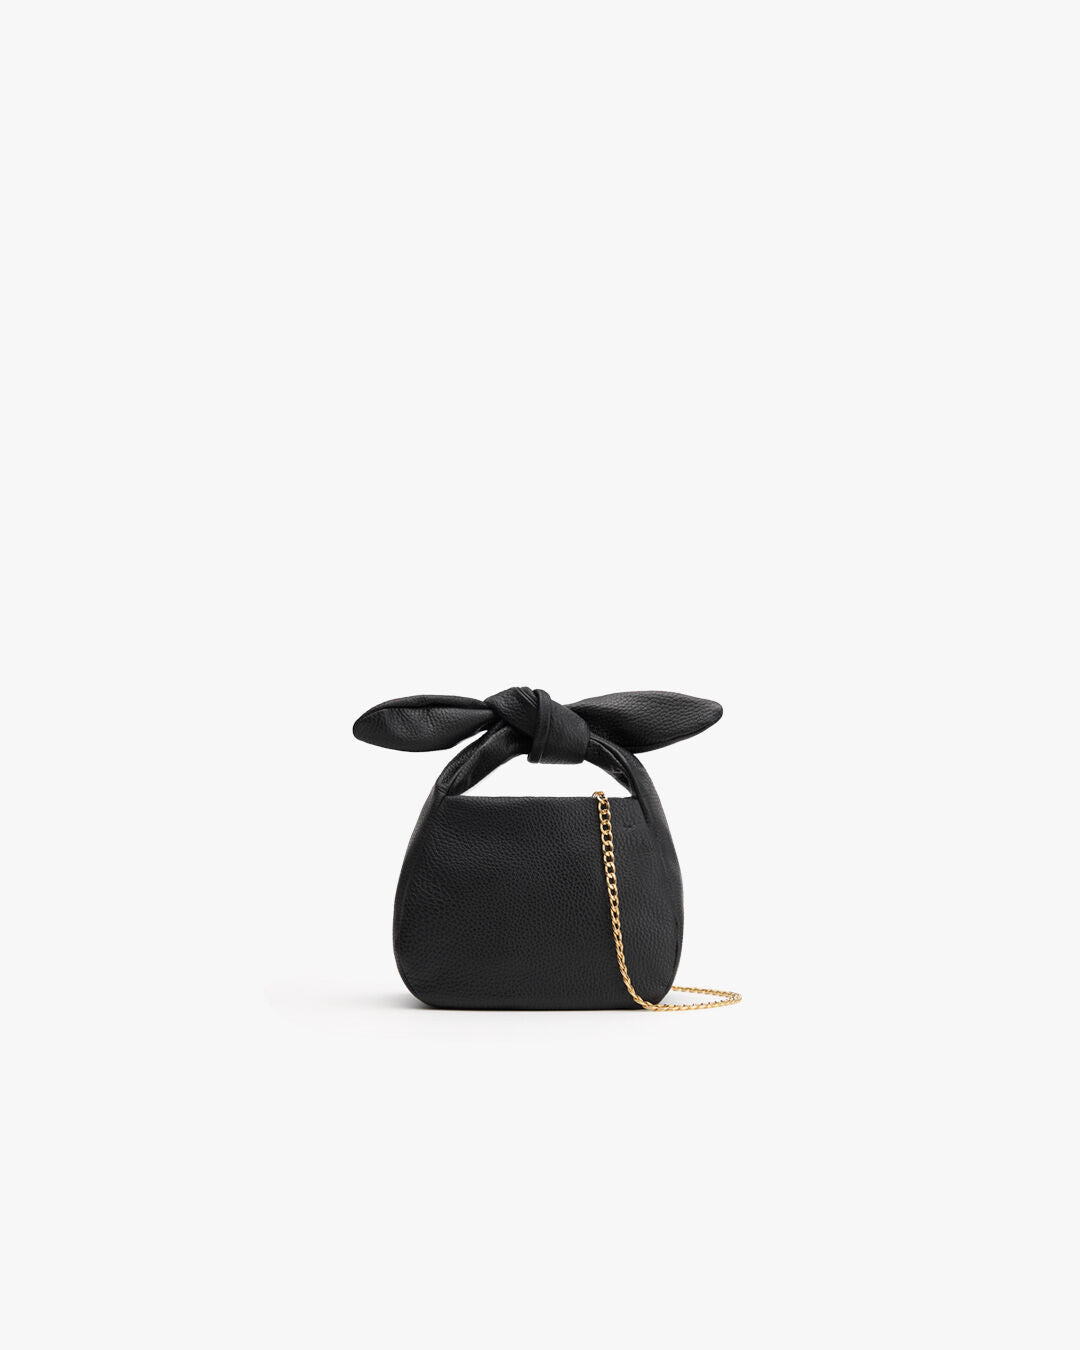 Cuyana - Holiday 2017 - Mini Bow Bag, Black